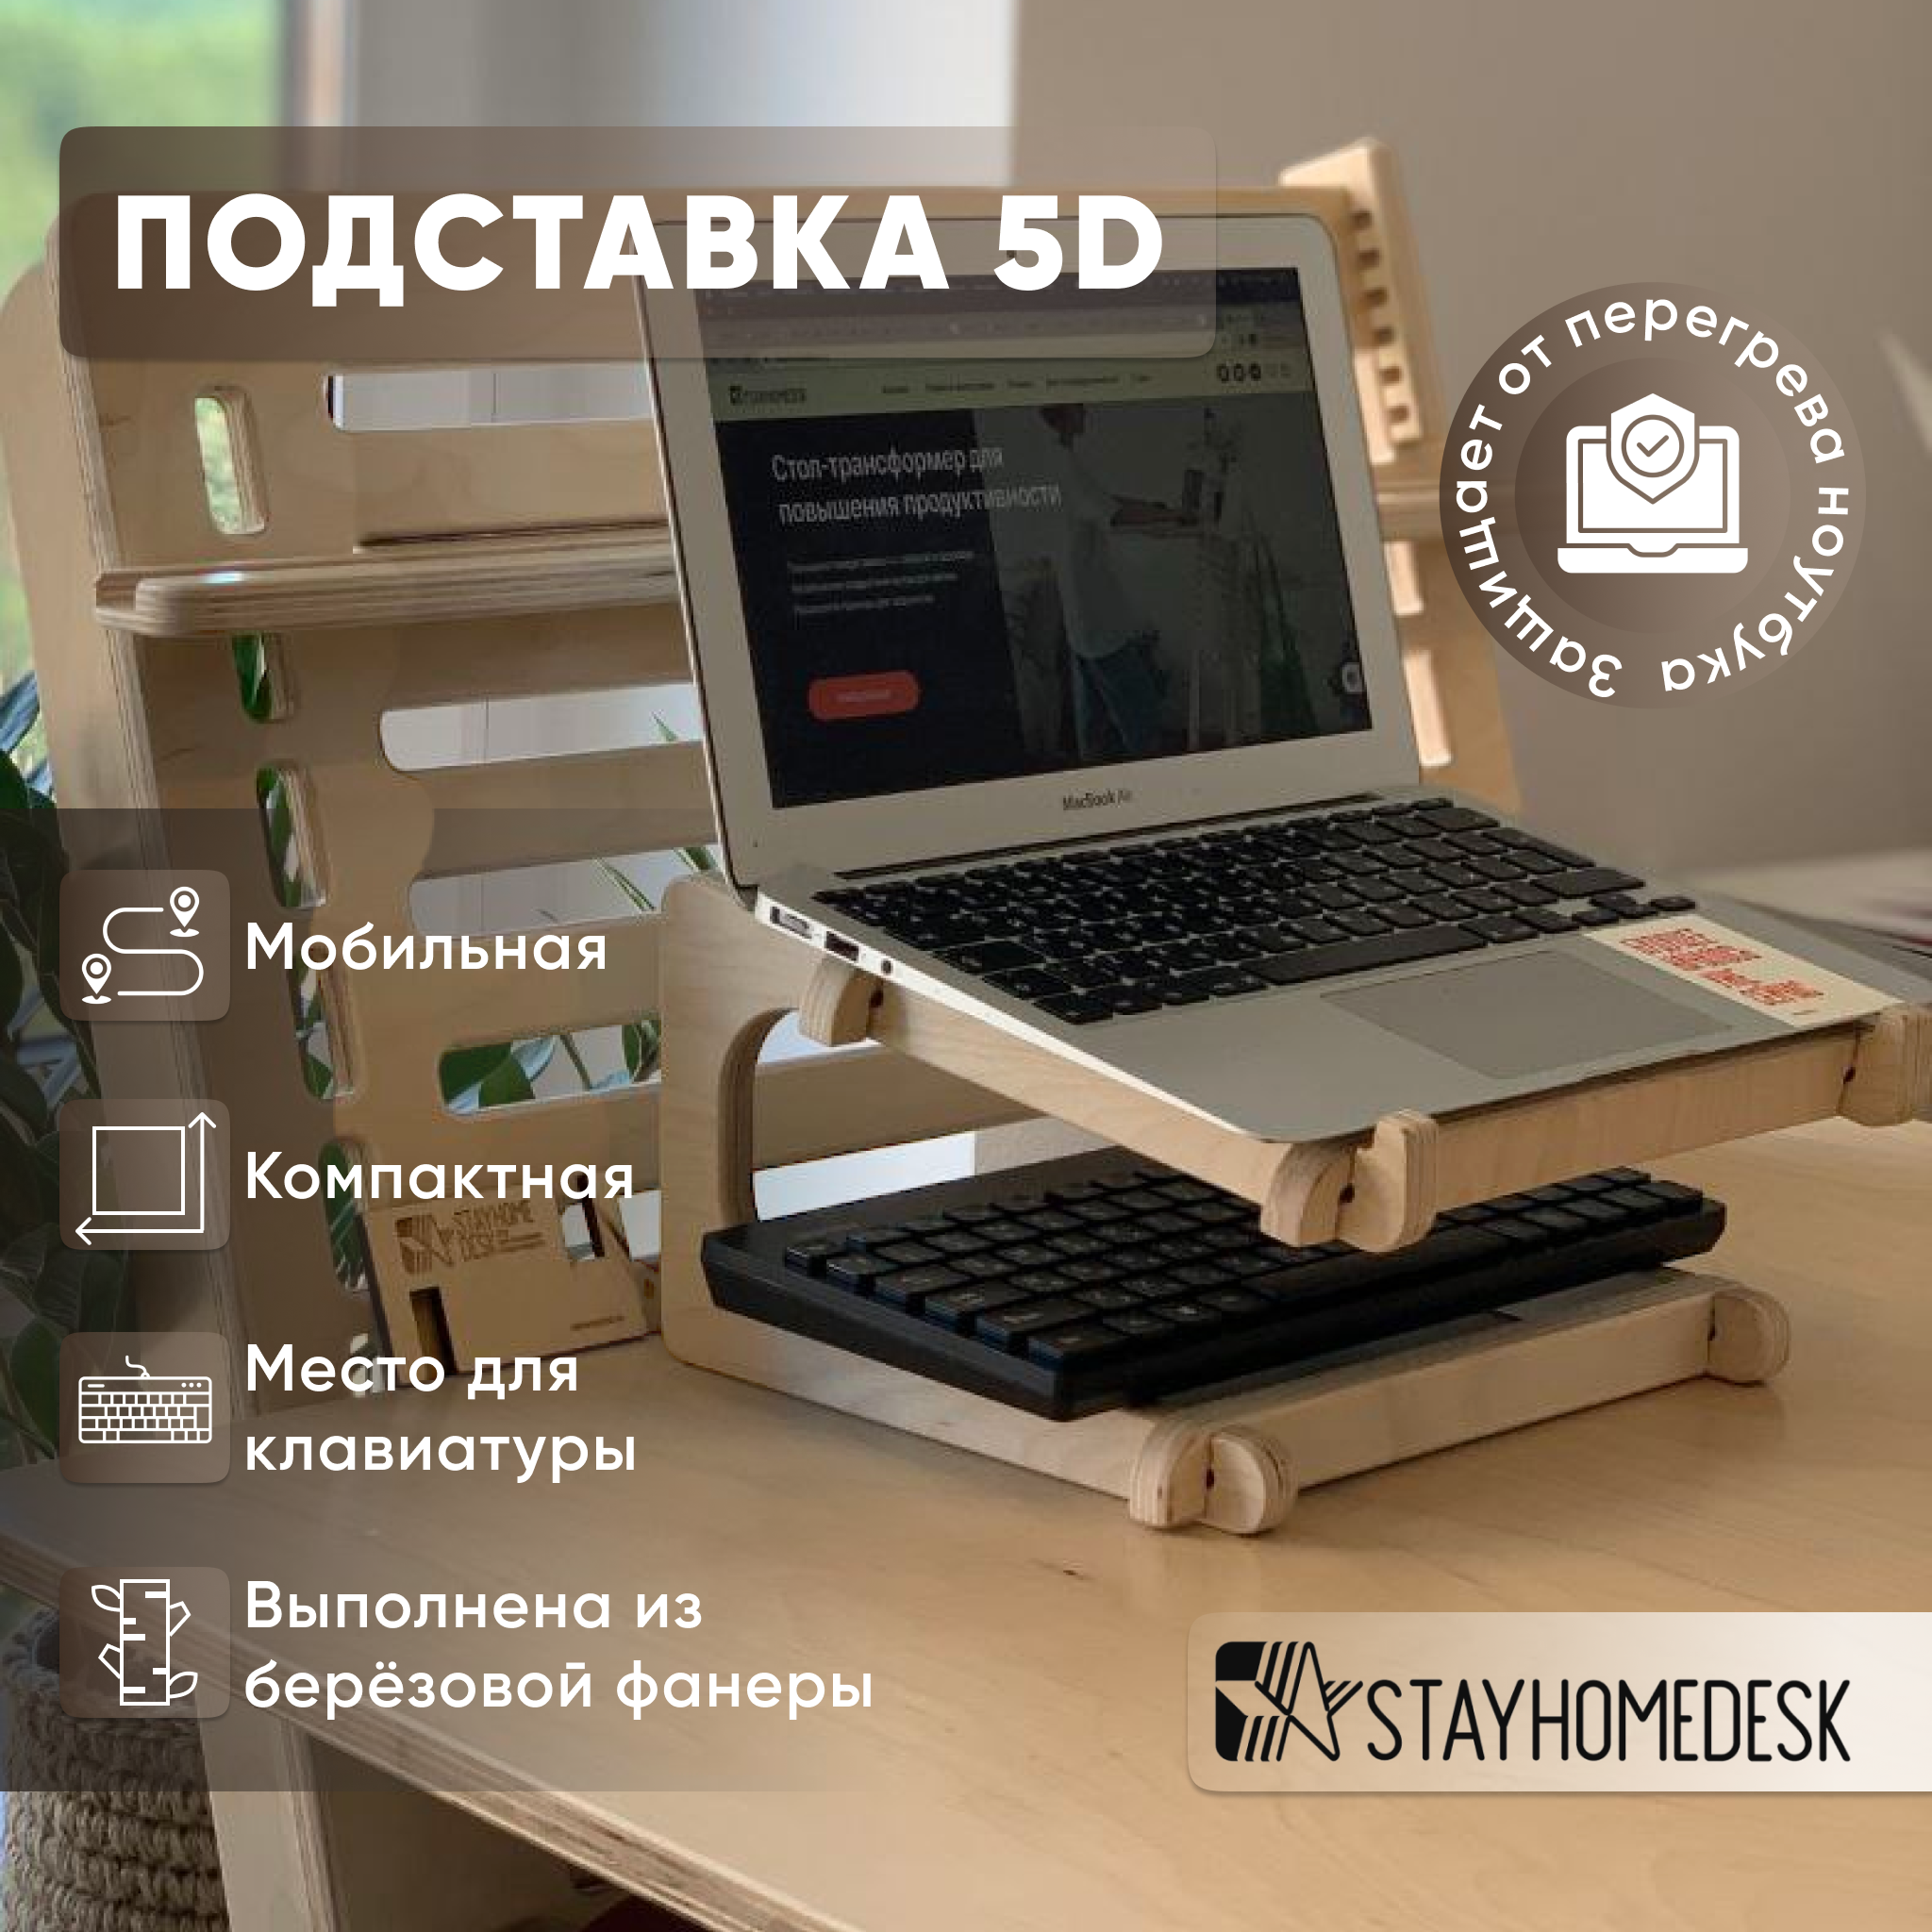 Подставка для ноутбука 5D STAYHOME DESK